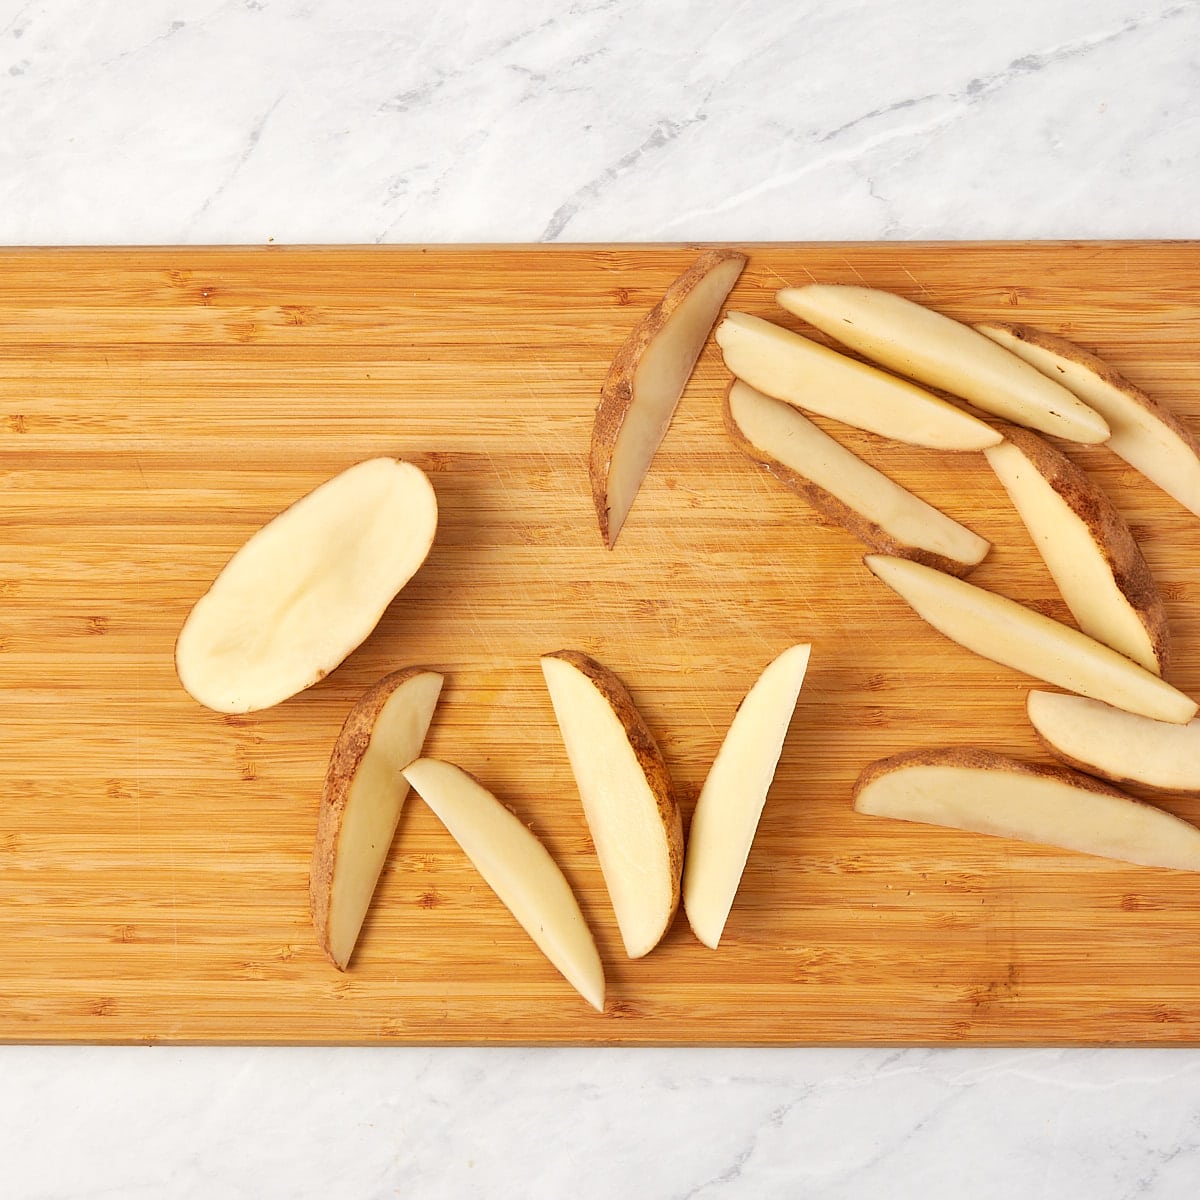 potato being cut in quarters on a cutting board.